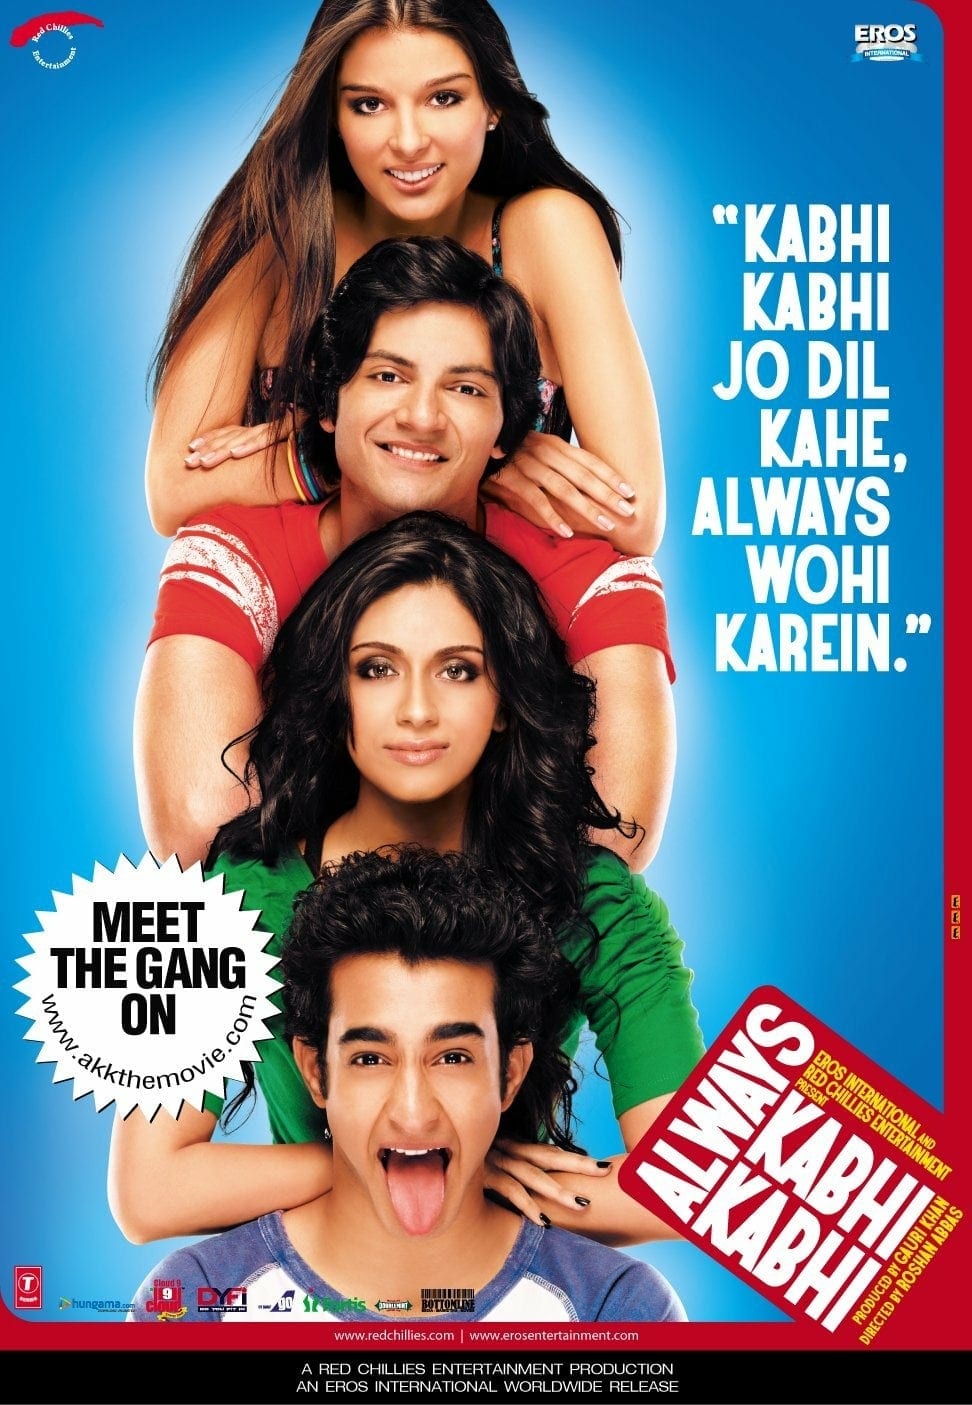 Poster for the movie "Always Kabhi Kabhi"